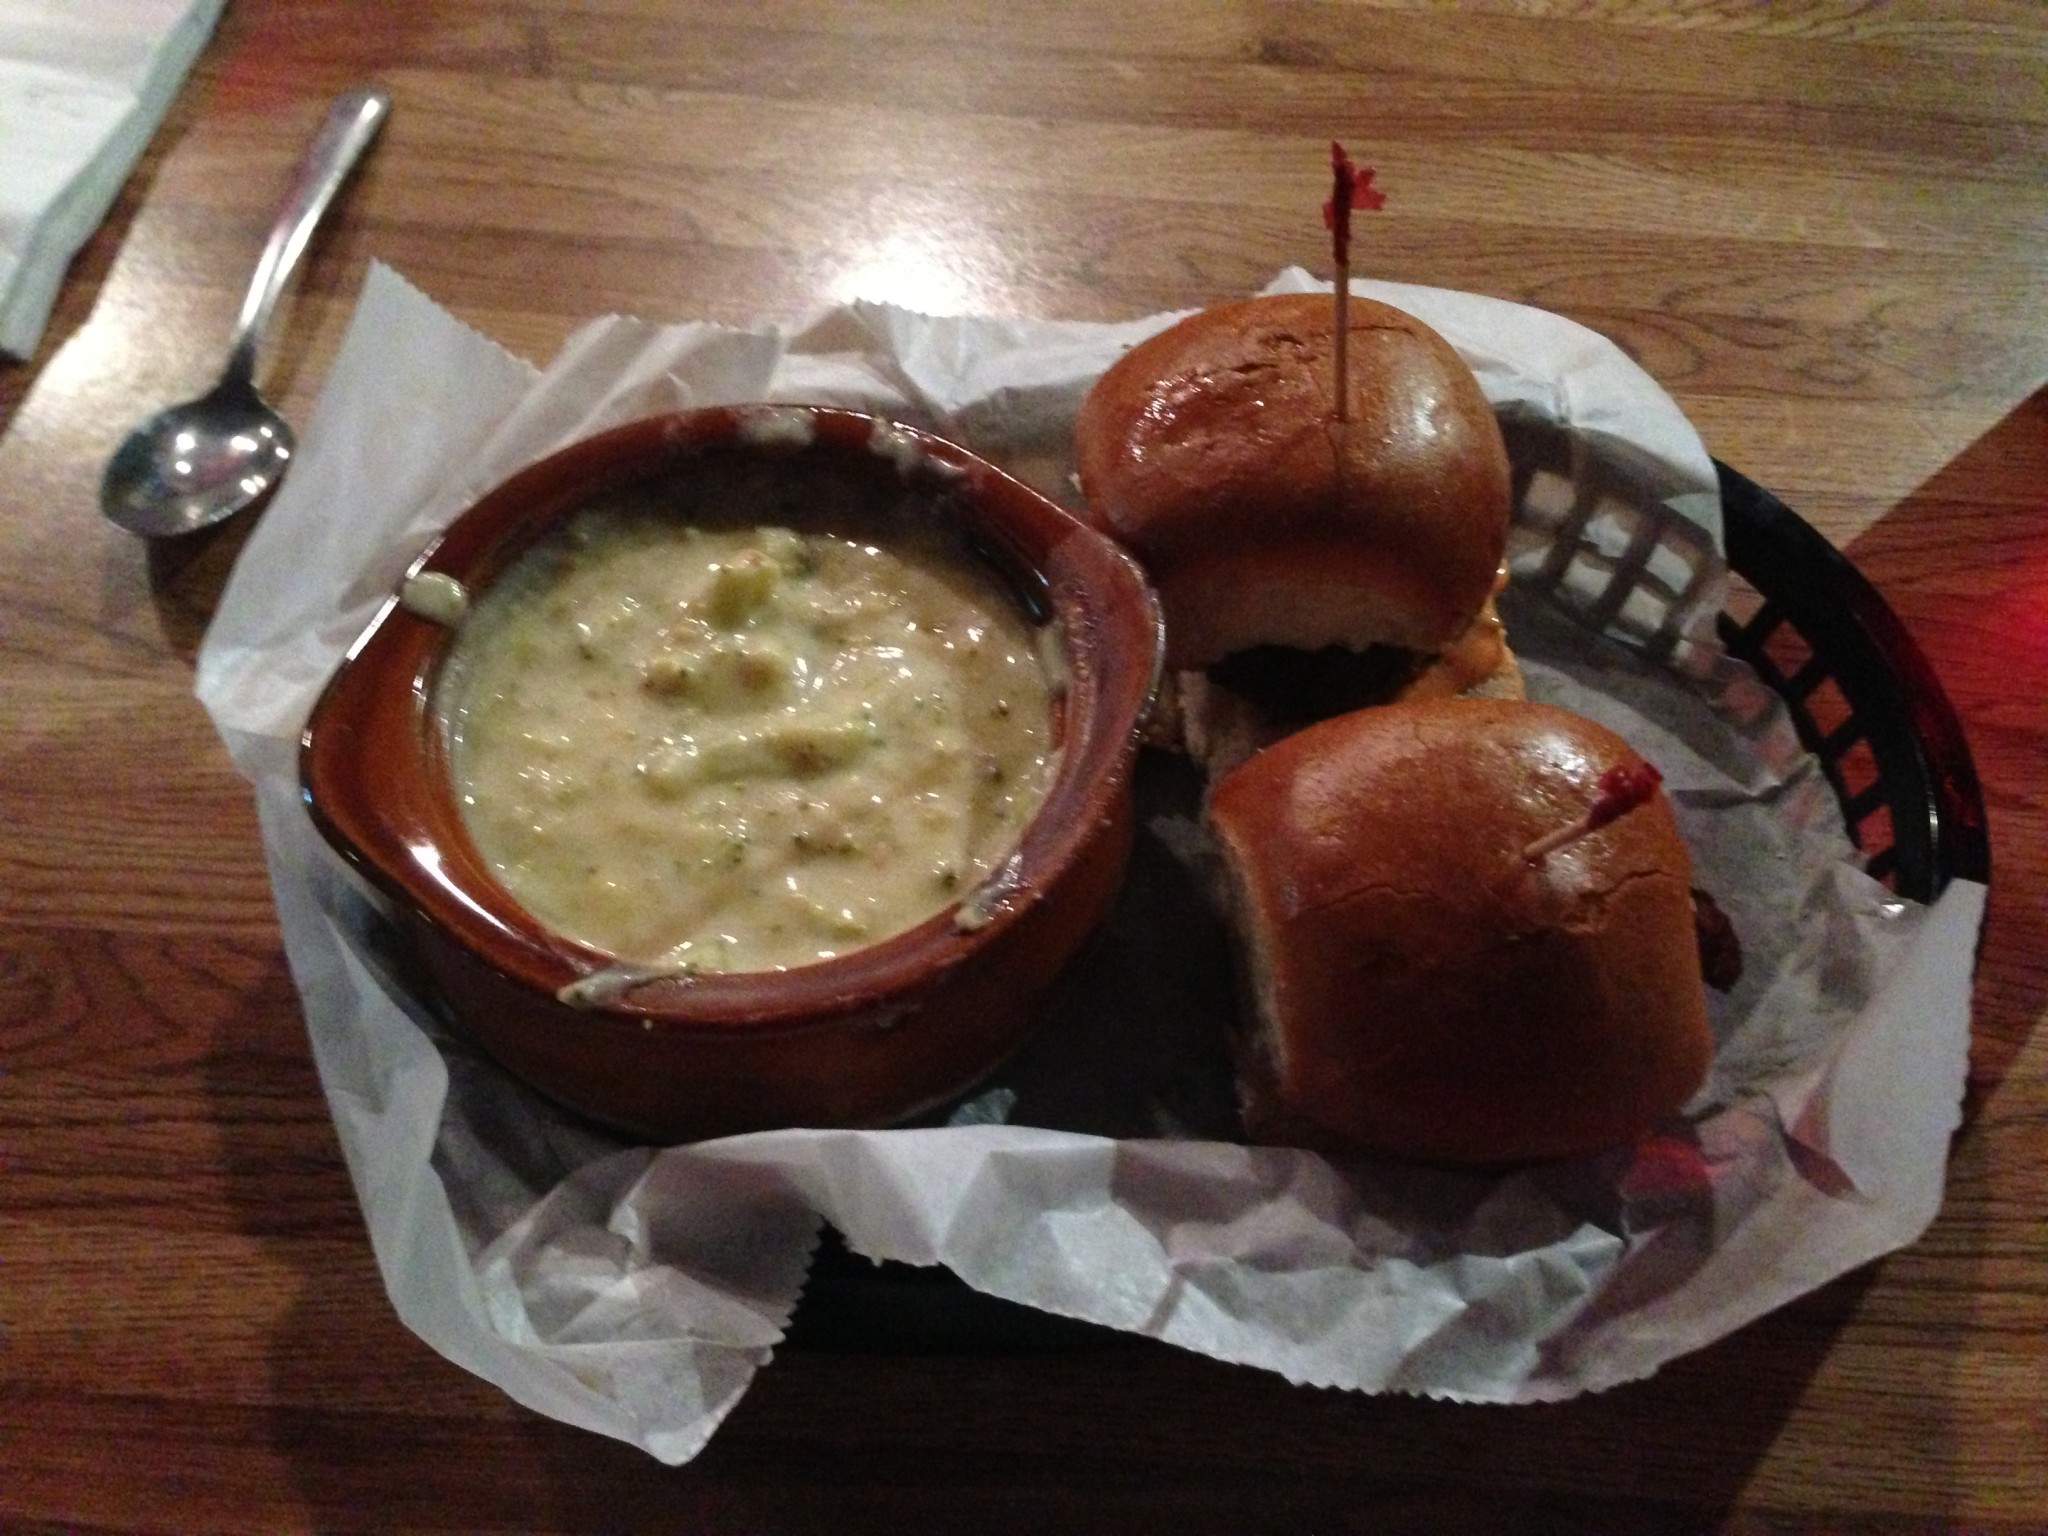 Minis and Broccoli Cheese Soup @ Hamburger Mary's